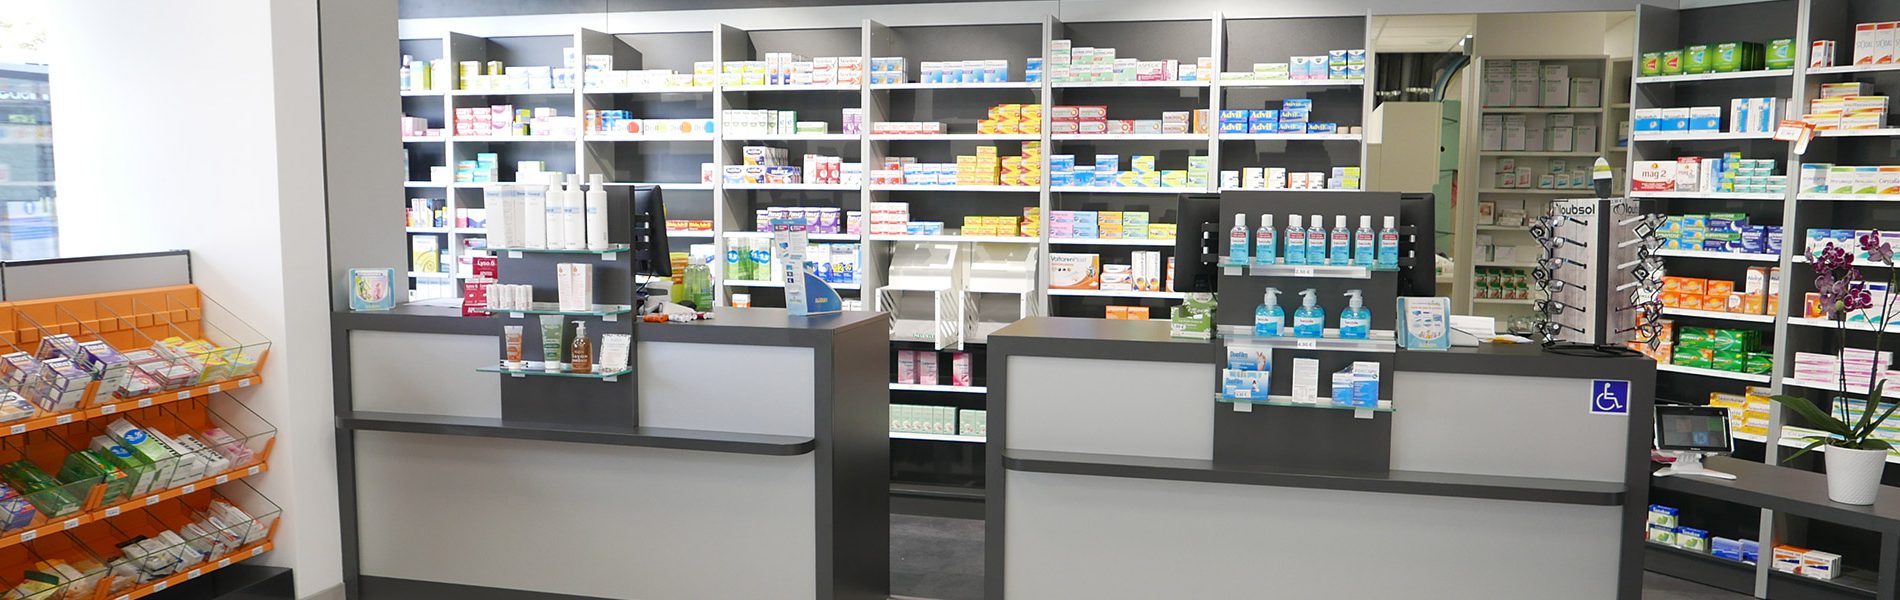 Pharmacie DU BOURG - Image Homepage 2